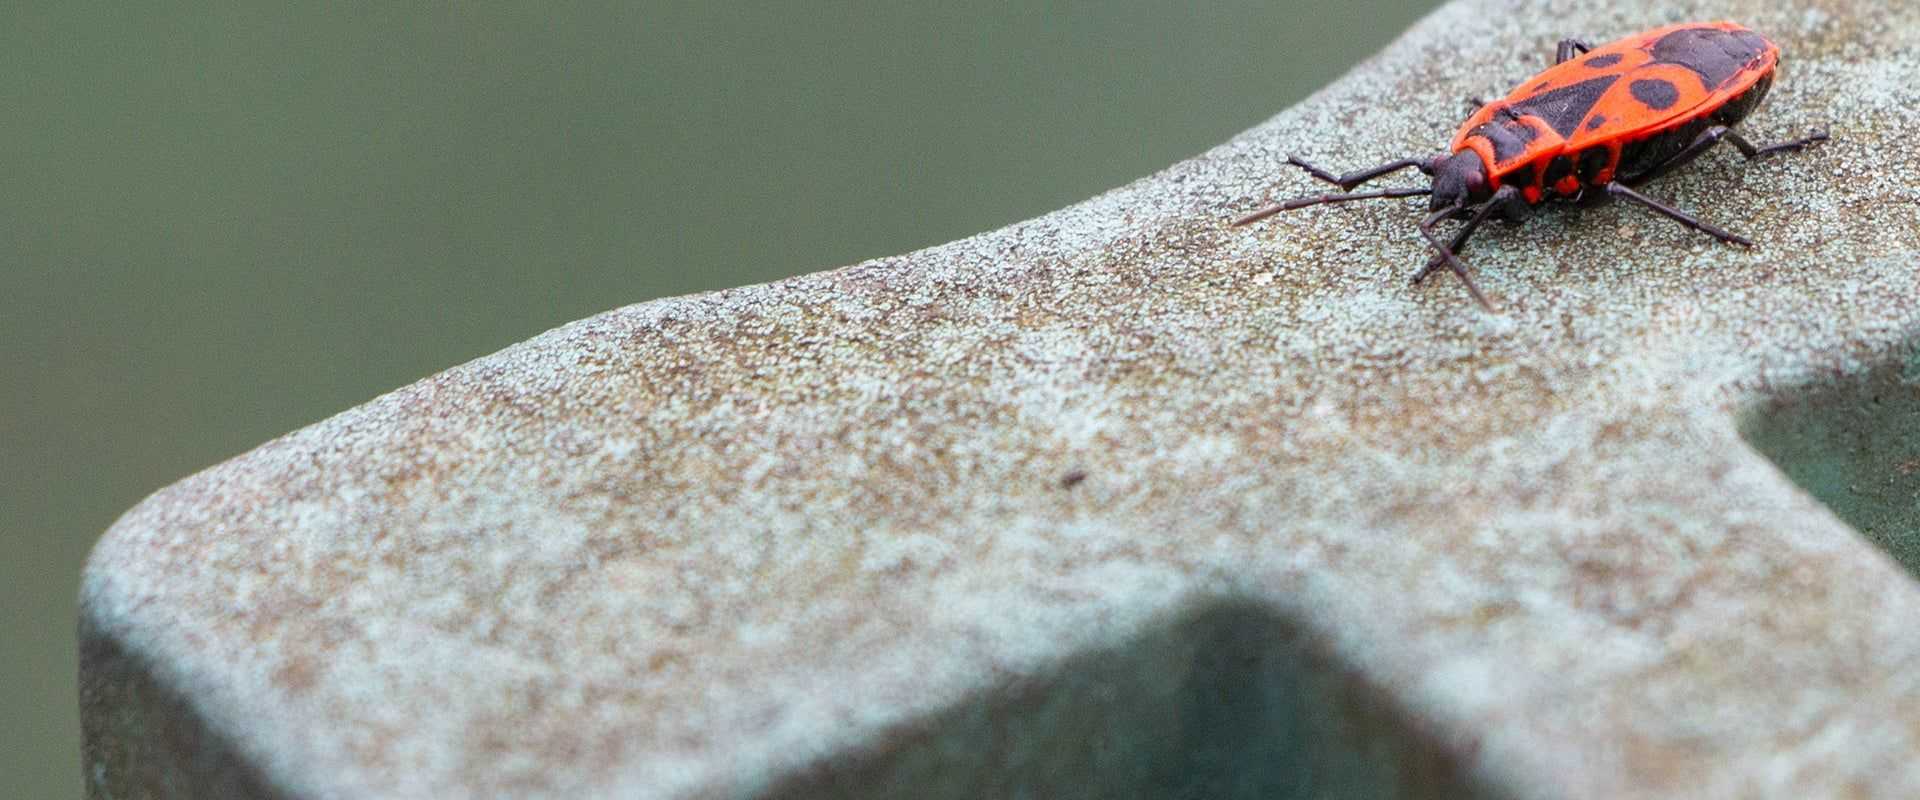 box elder bug up close on metal